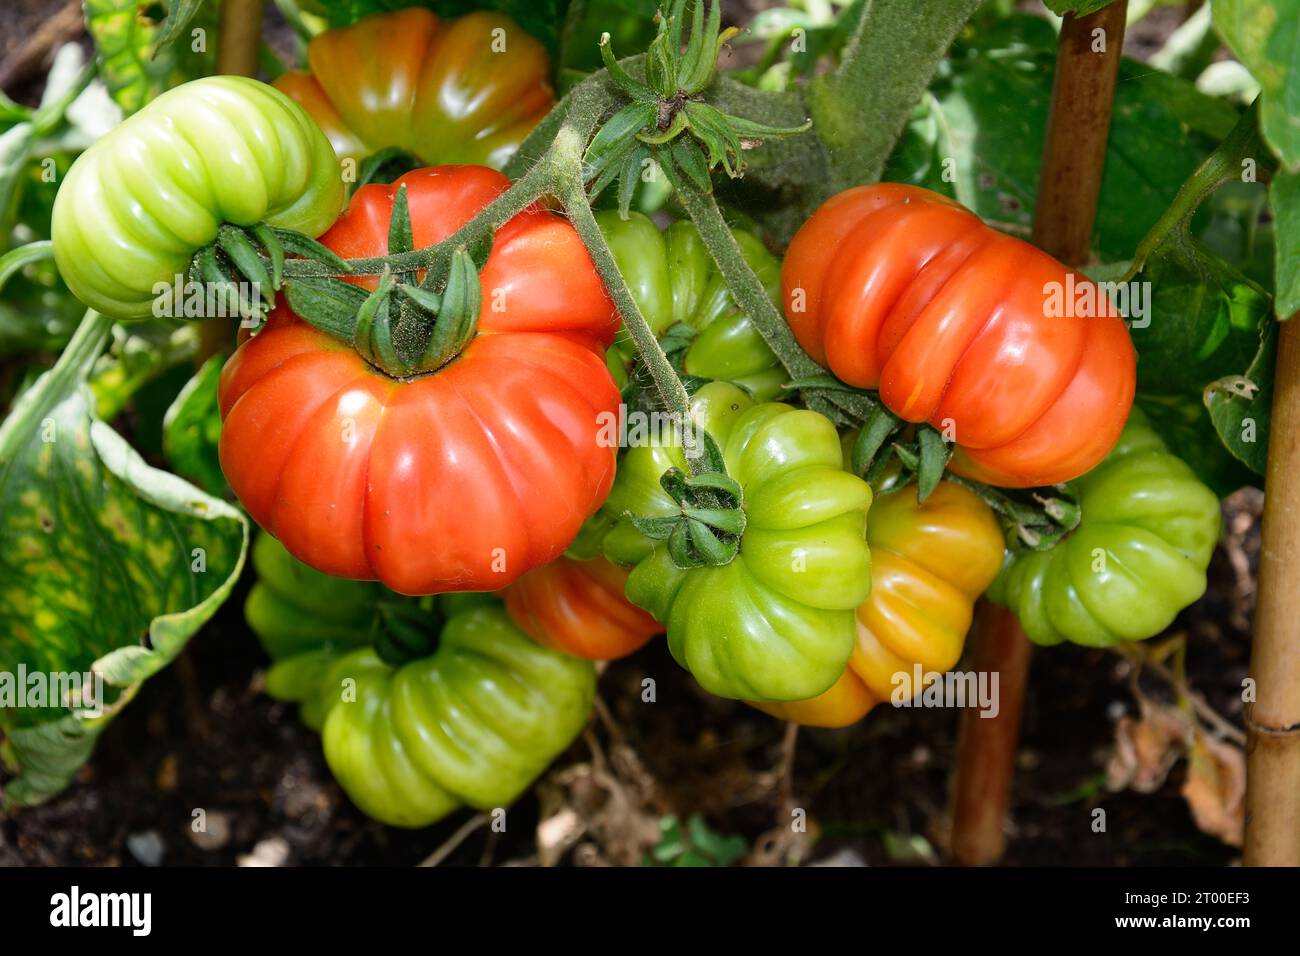 Costoluto Fiorentino tomatoes growing on the vine in a garden veg plot, UK, Europe Stock Photo